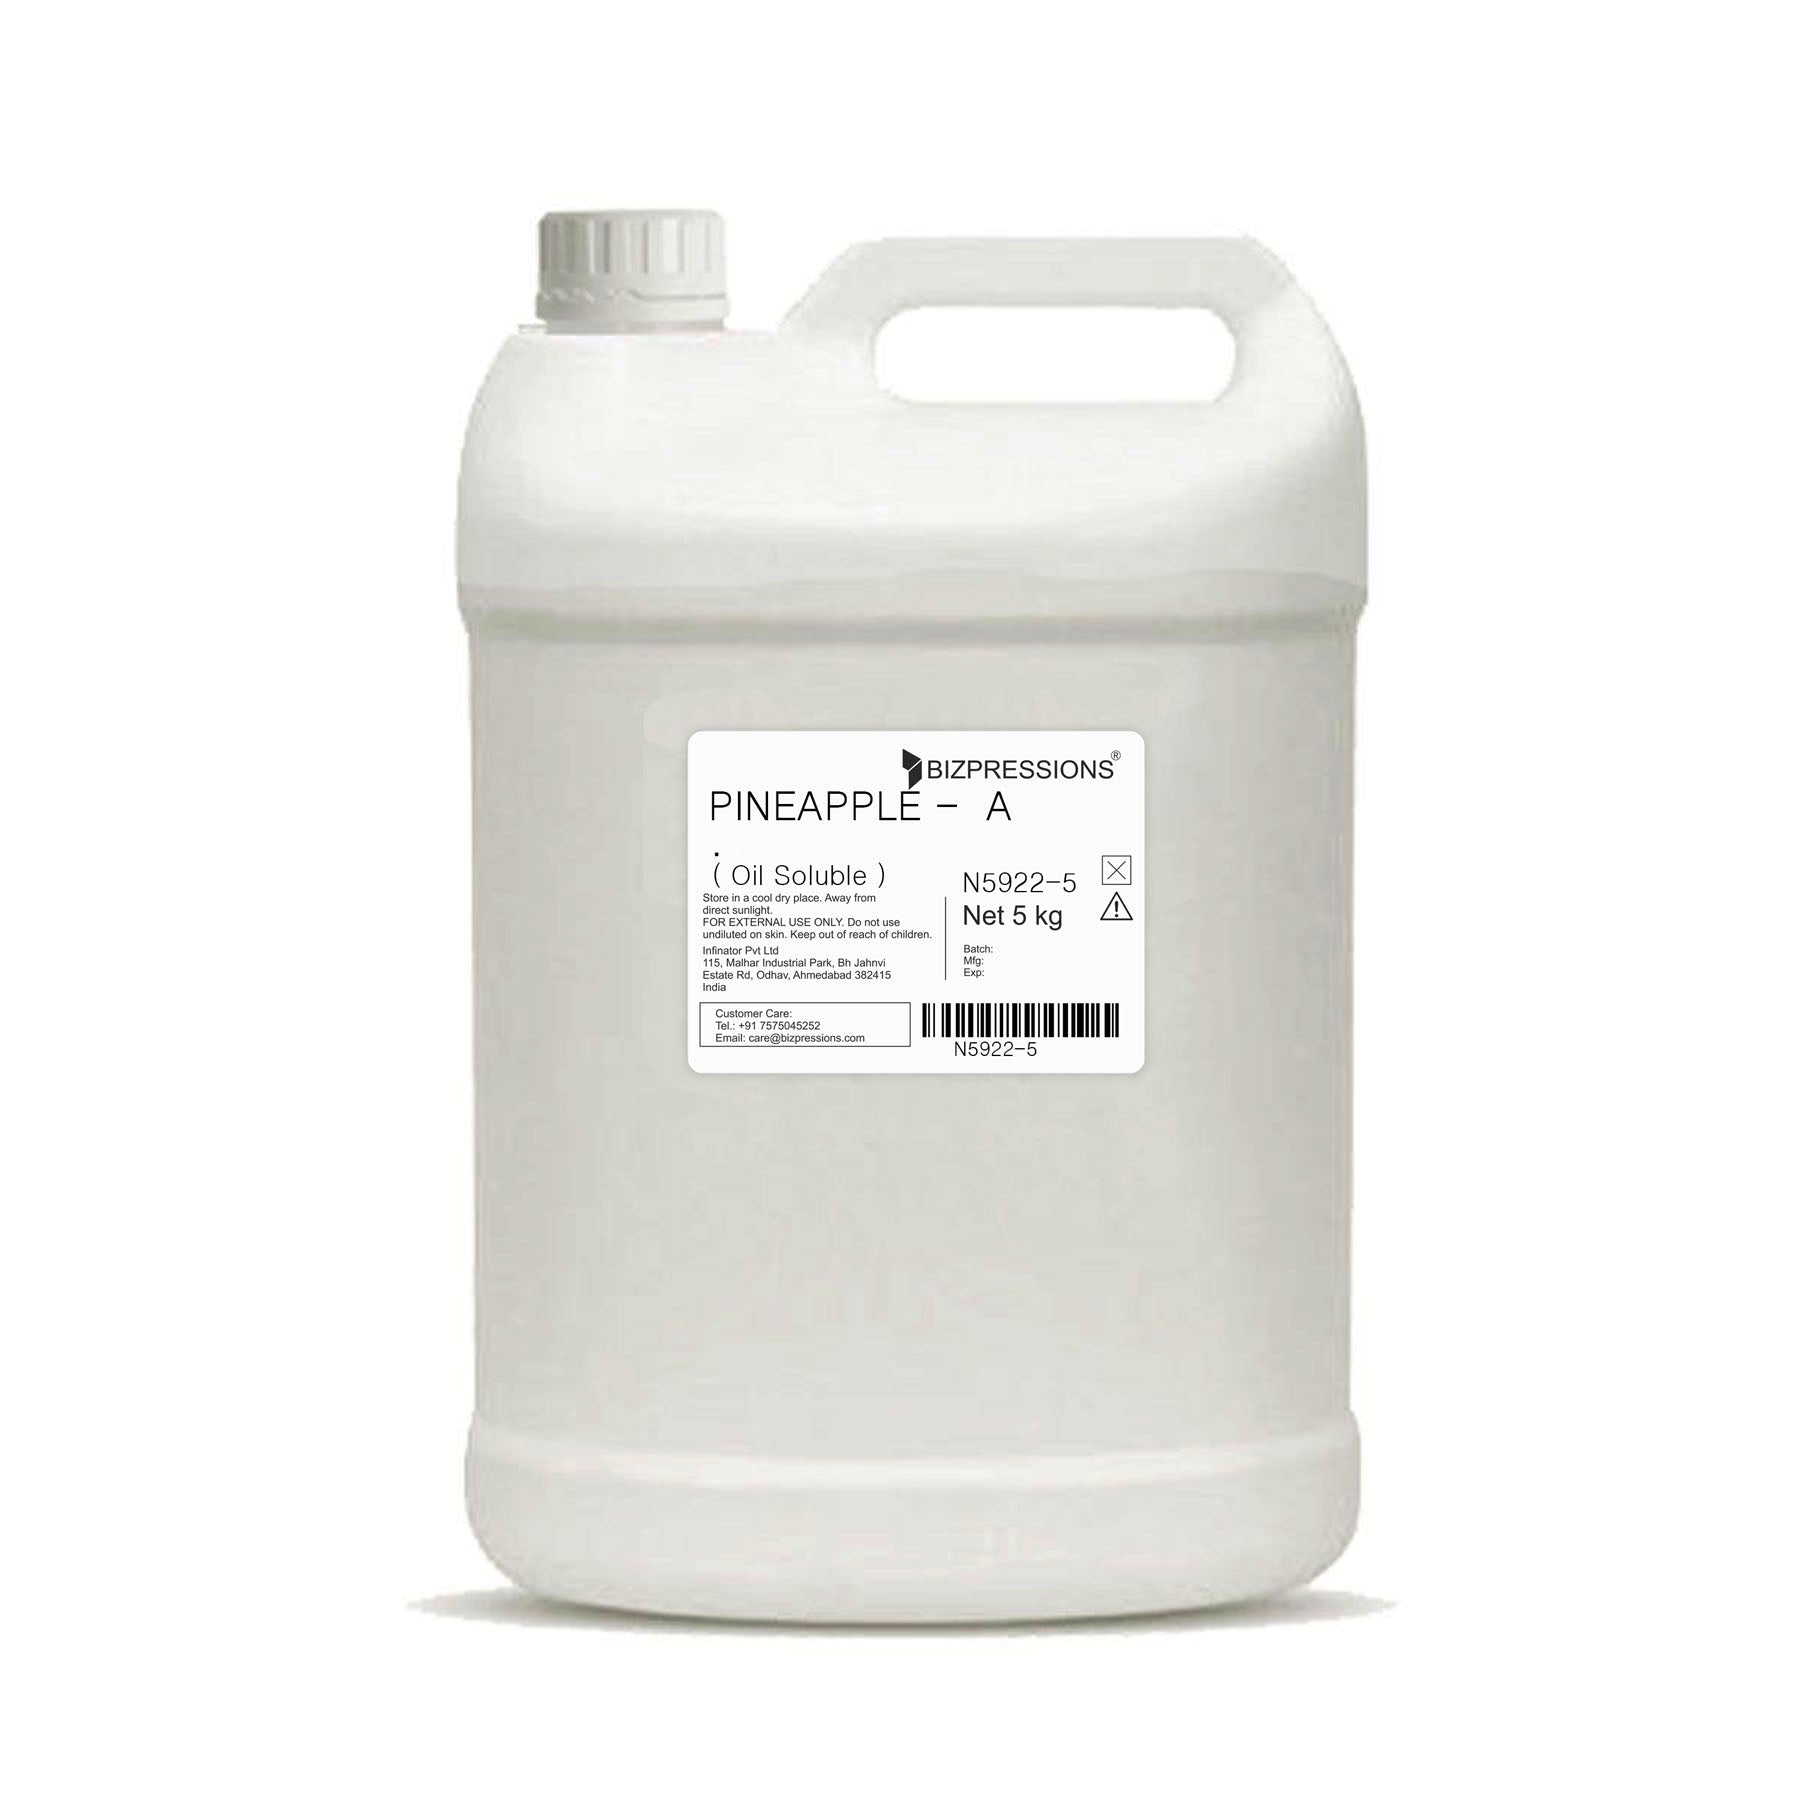 PINEAPPLE - A - Fragrance ( Oil Soluble ) - 5 kg